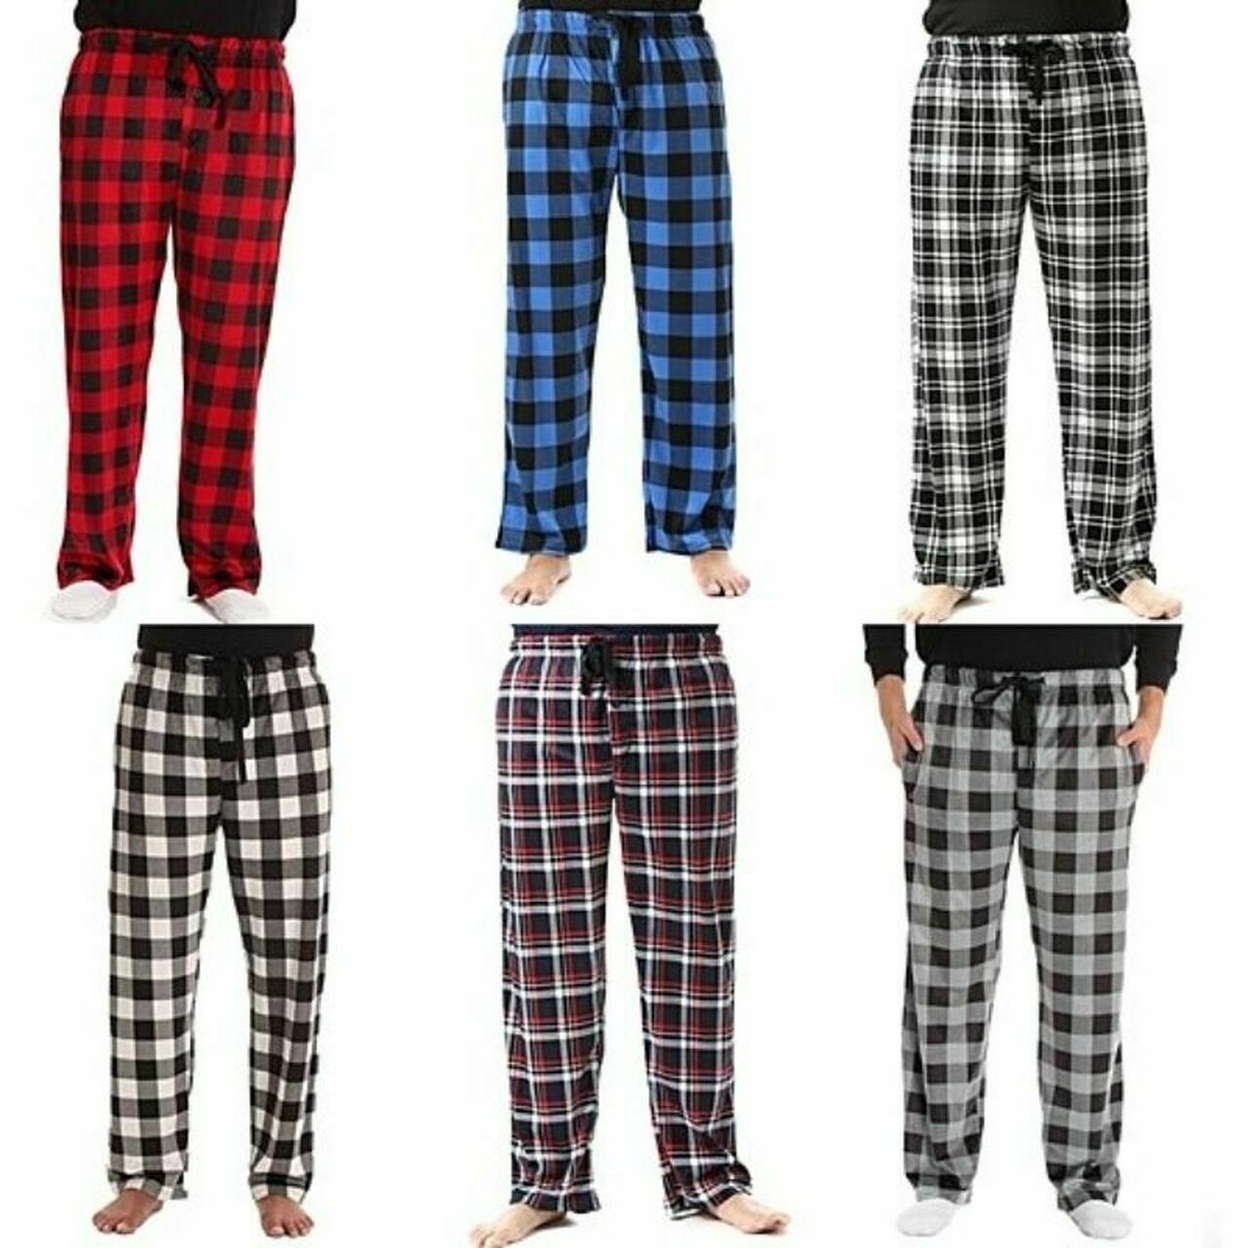 2-Pack: Men's Ultra Soft Cozy Flannel Fleece Plaid Pajama Sleep Bottom Lounge Pants - Black & Grey, X-large